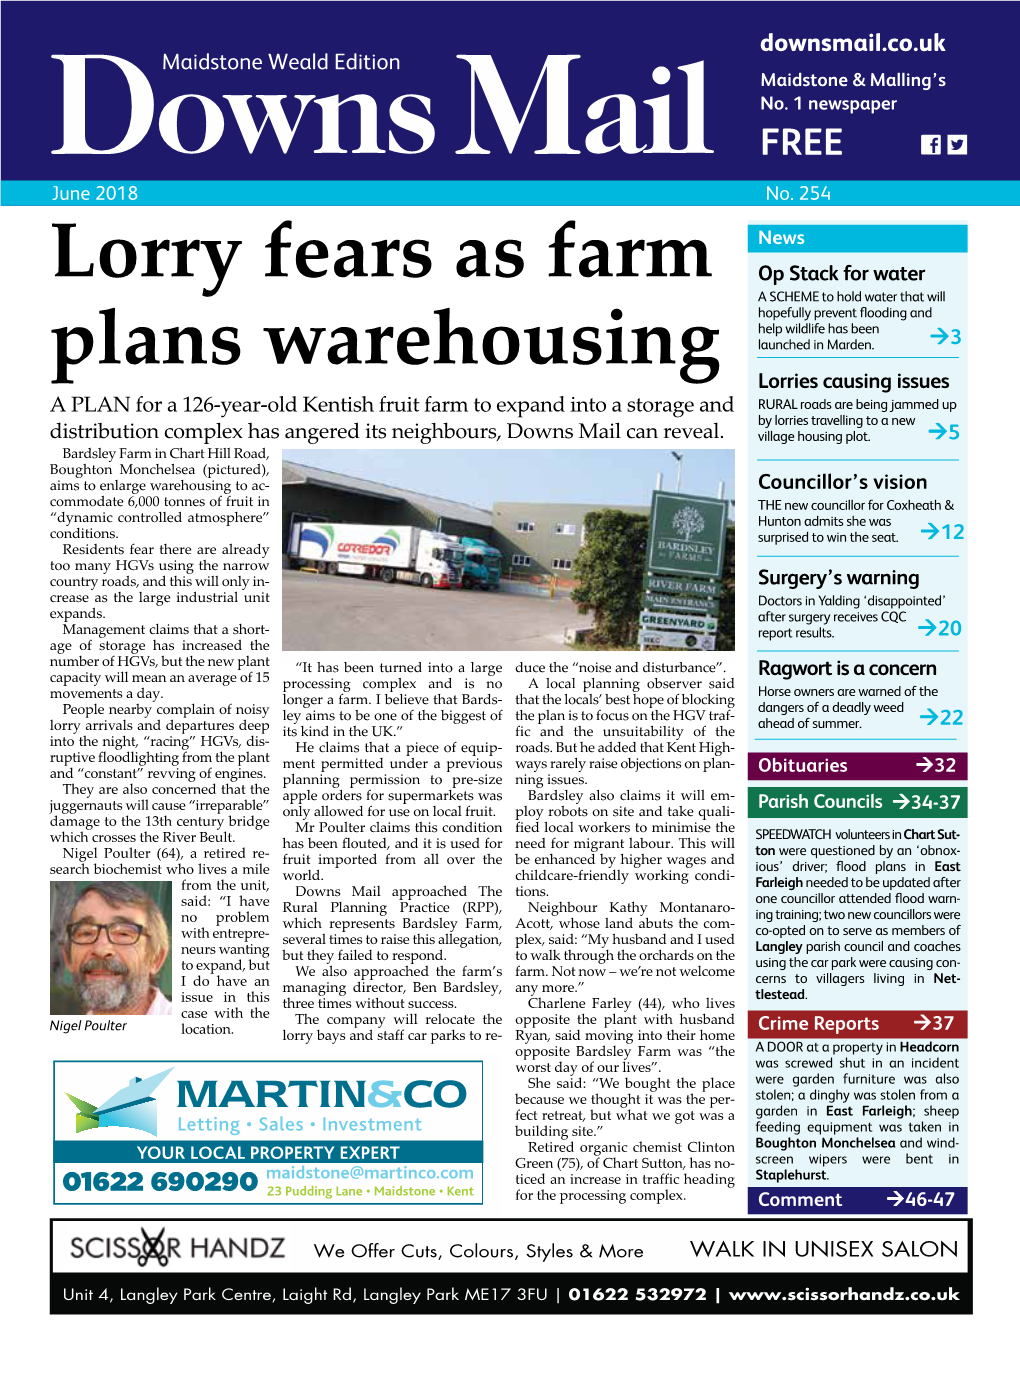 Lorry Fears As Farm Plans Warehousing